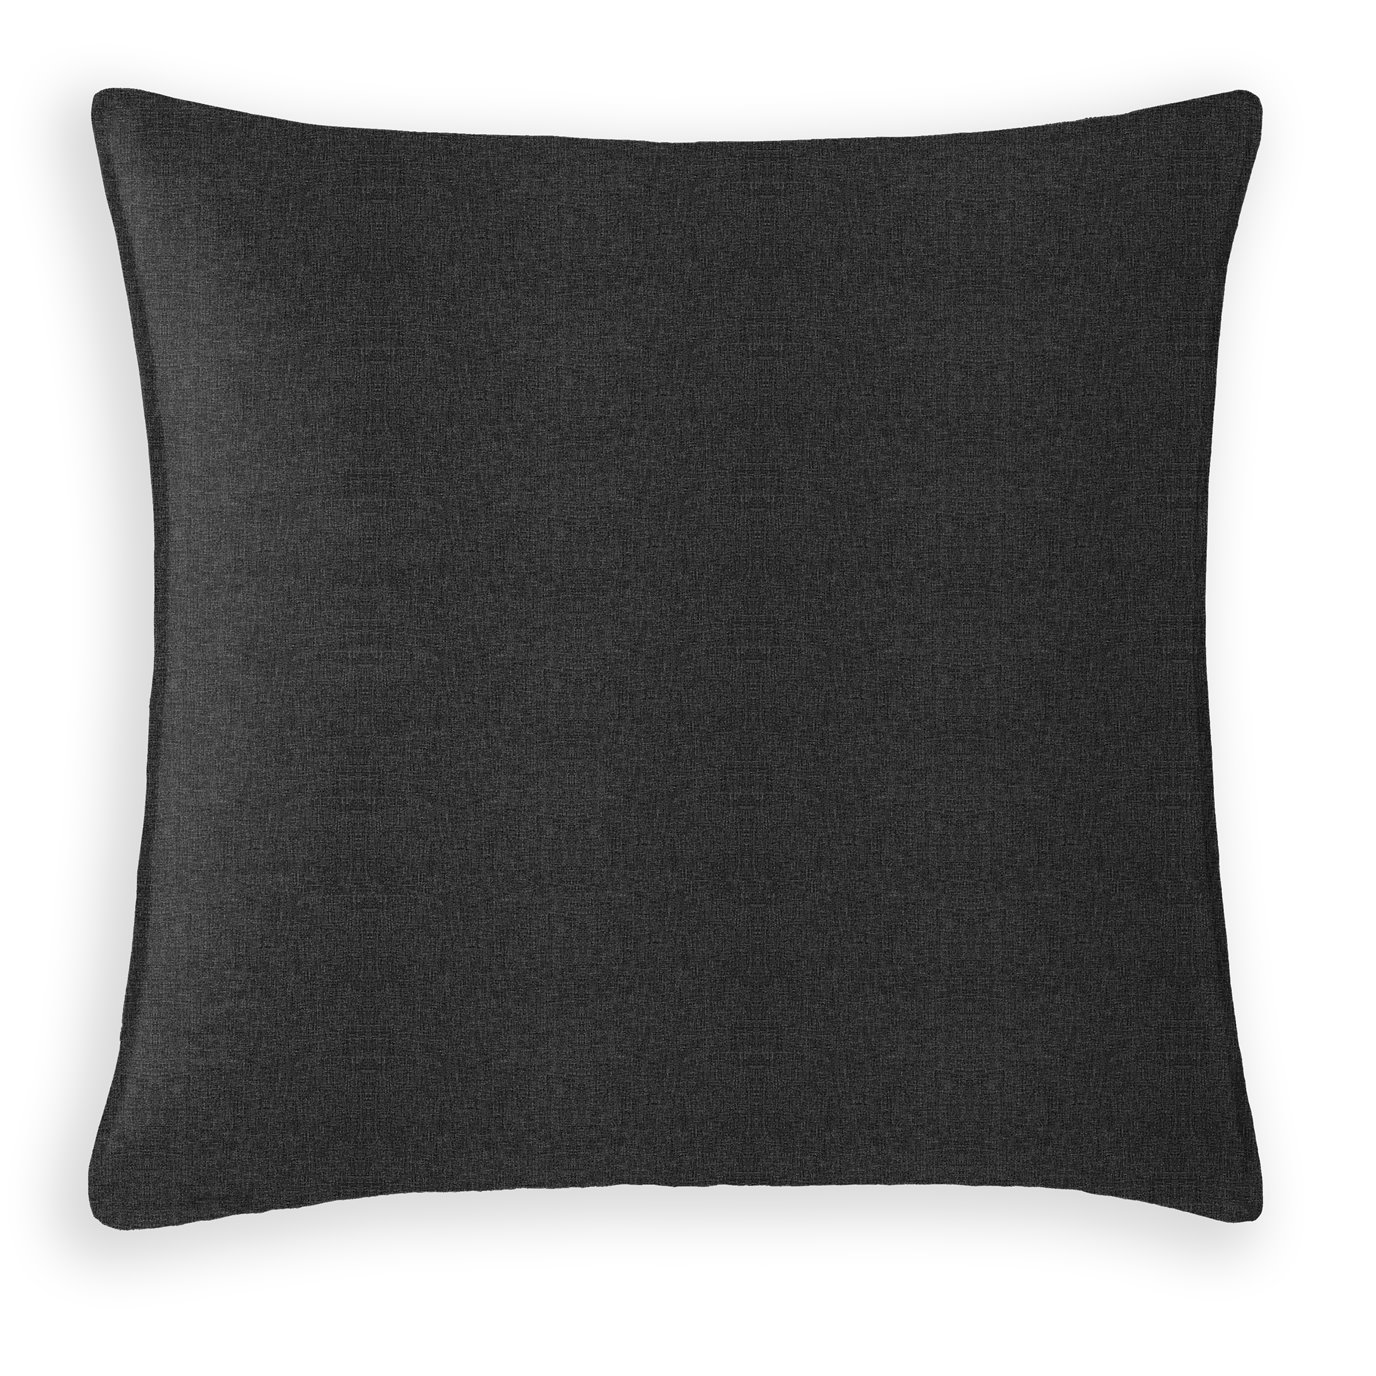 Flint Decorative Cushion - 20 Inch Square - Coordinating Velvet